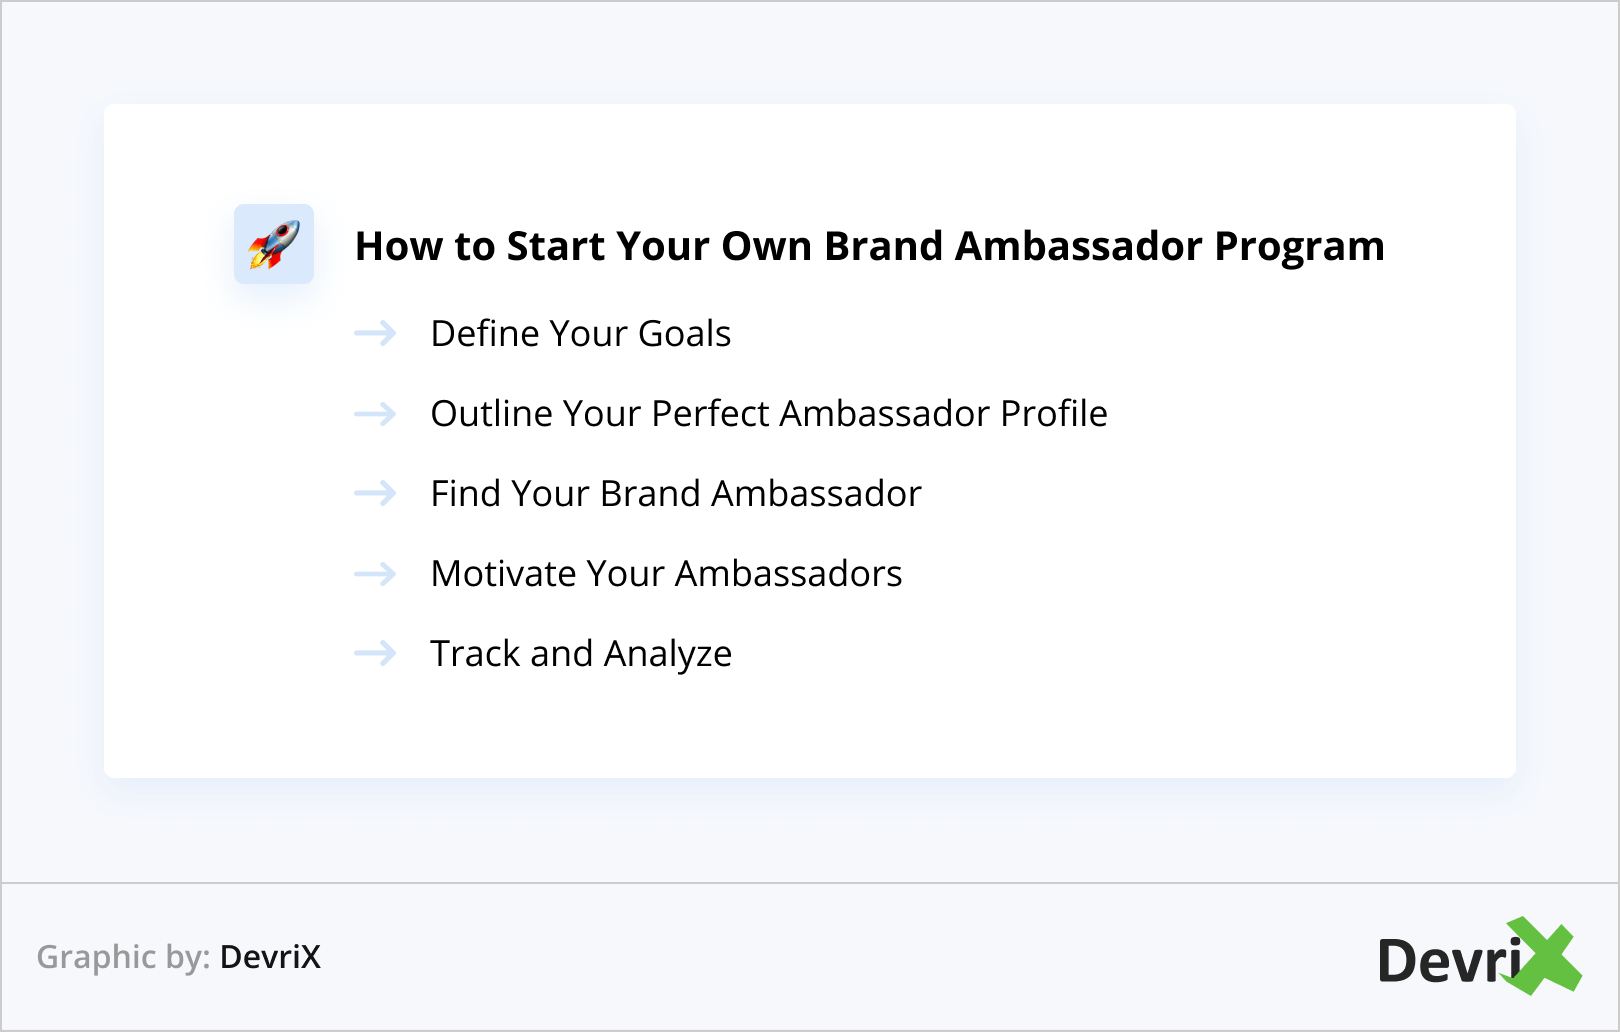 How to Start Your Own Brand Ambassador Program